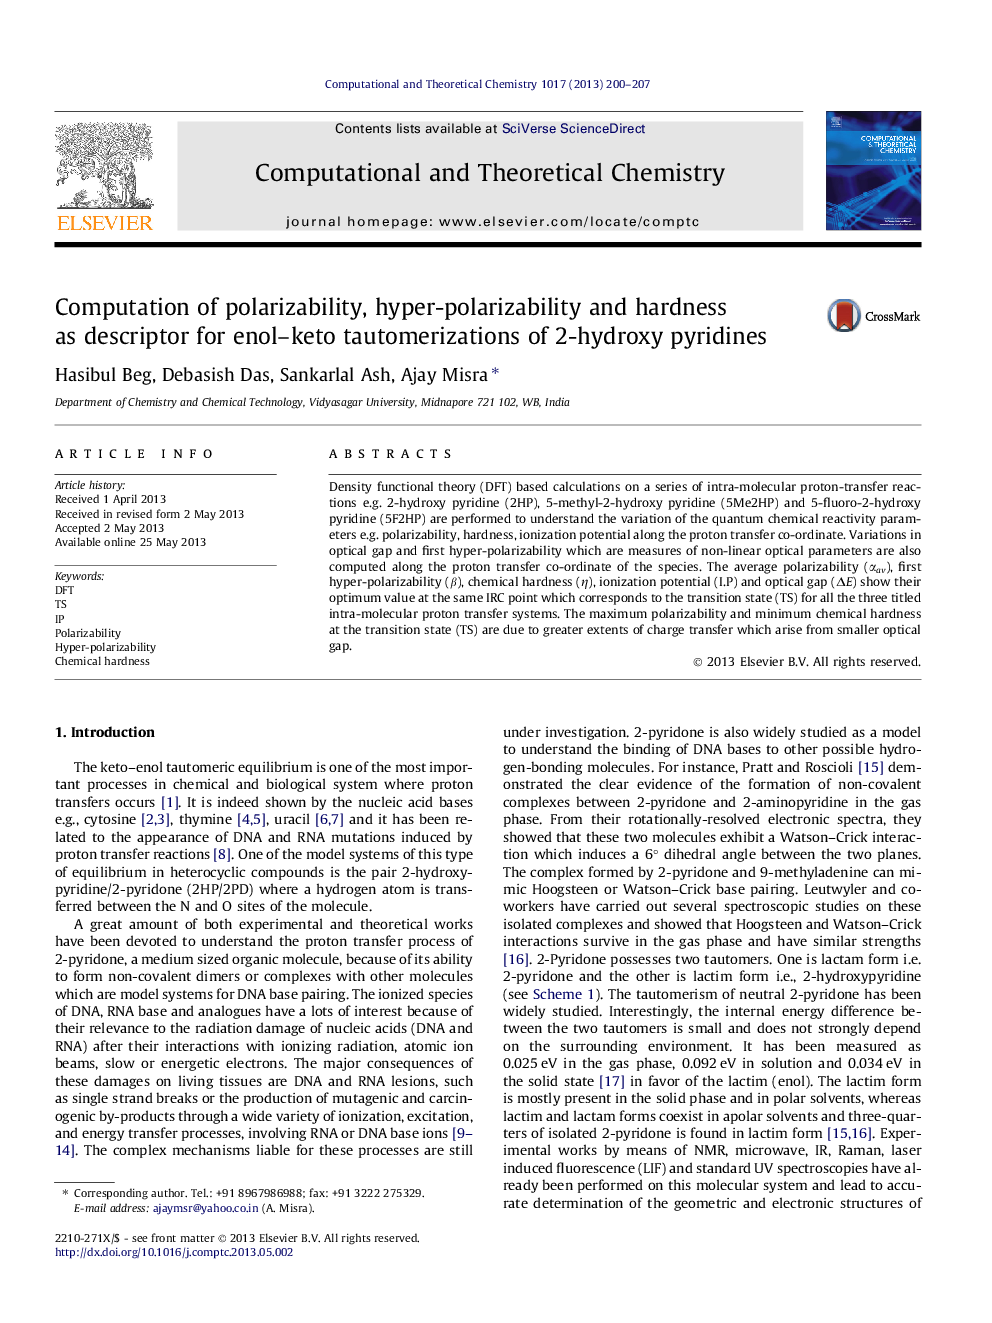 Computation of polarizability, hyper-polarizability and hardness as descriptor for enol-keto tautomerizations of 2-hydroxy pyridines